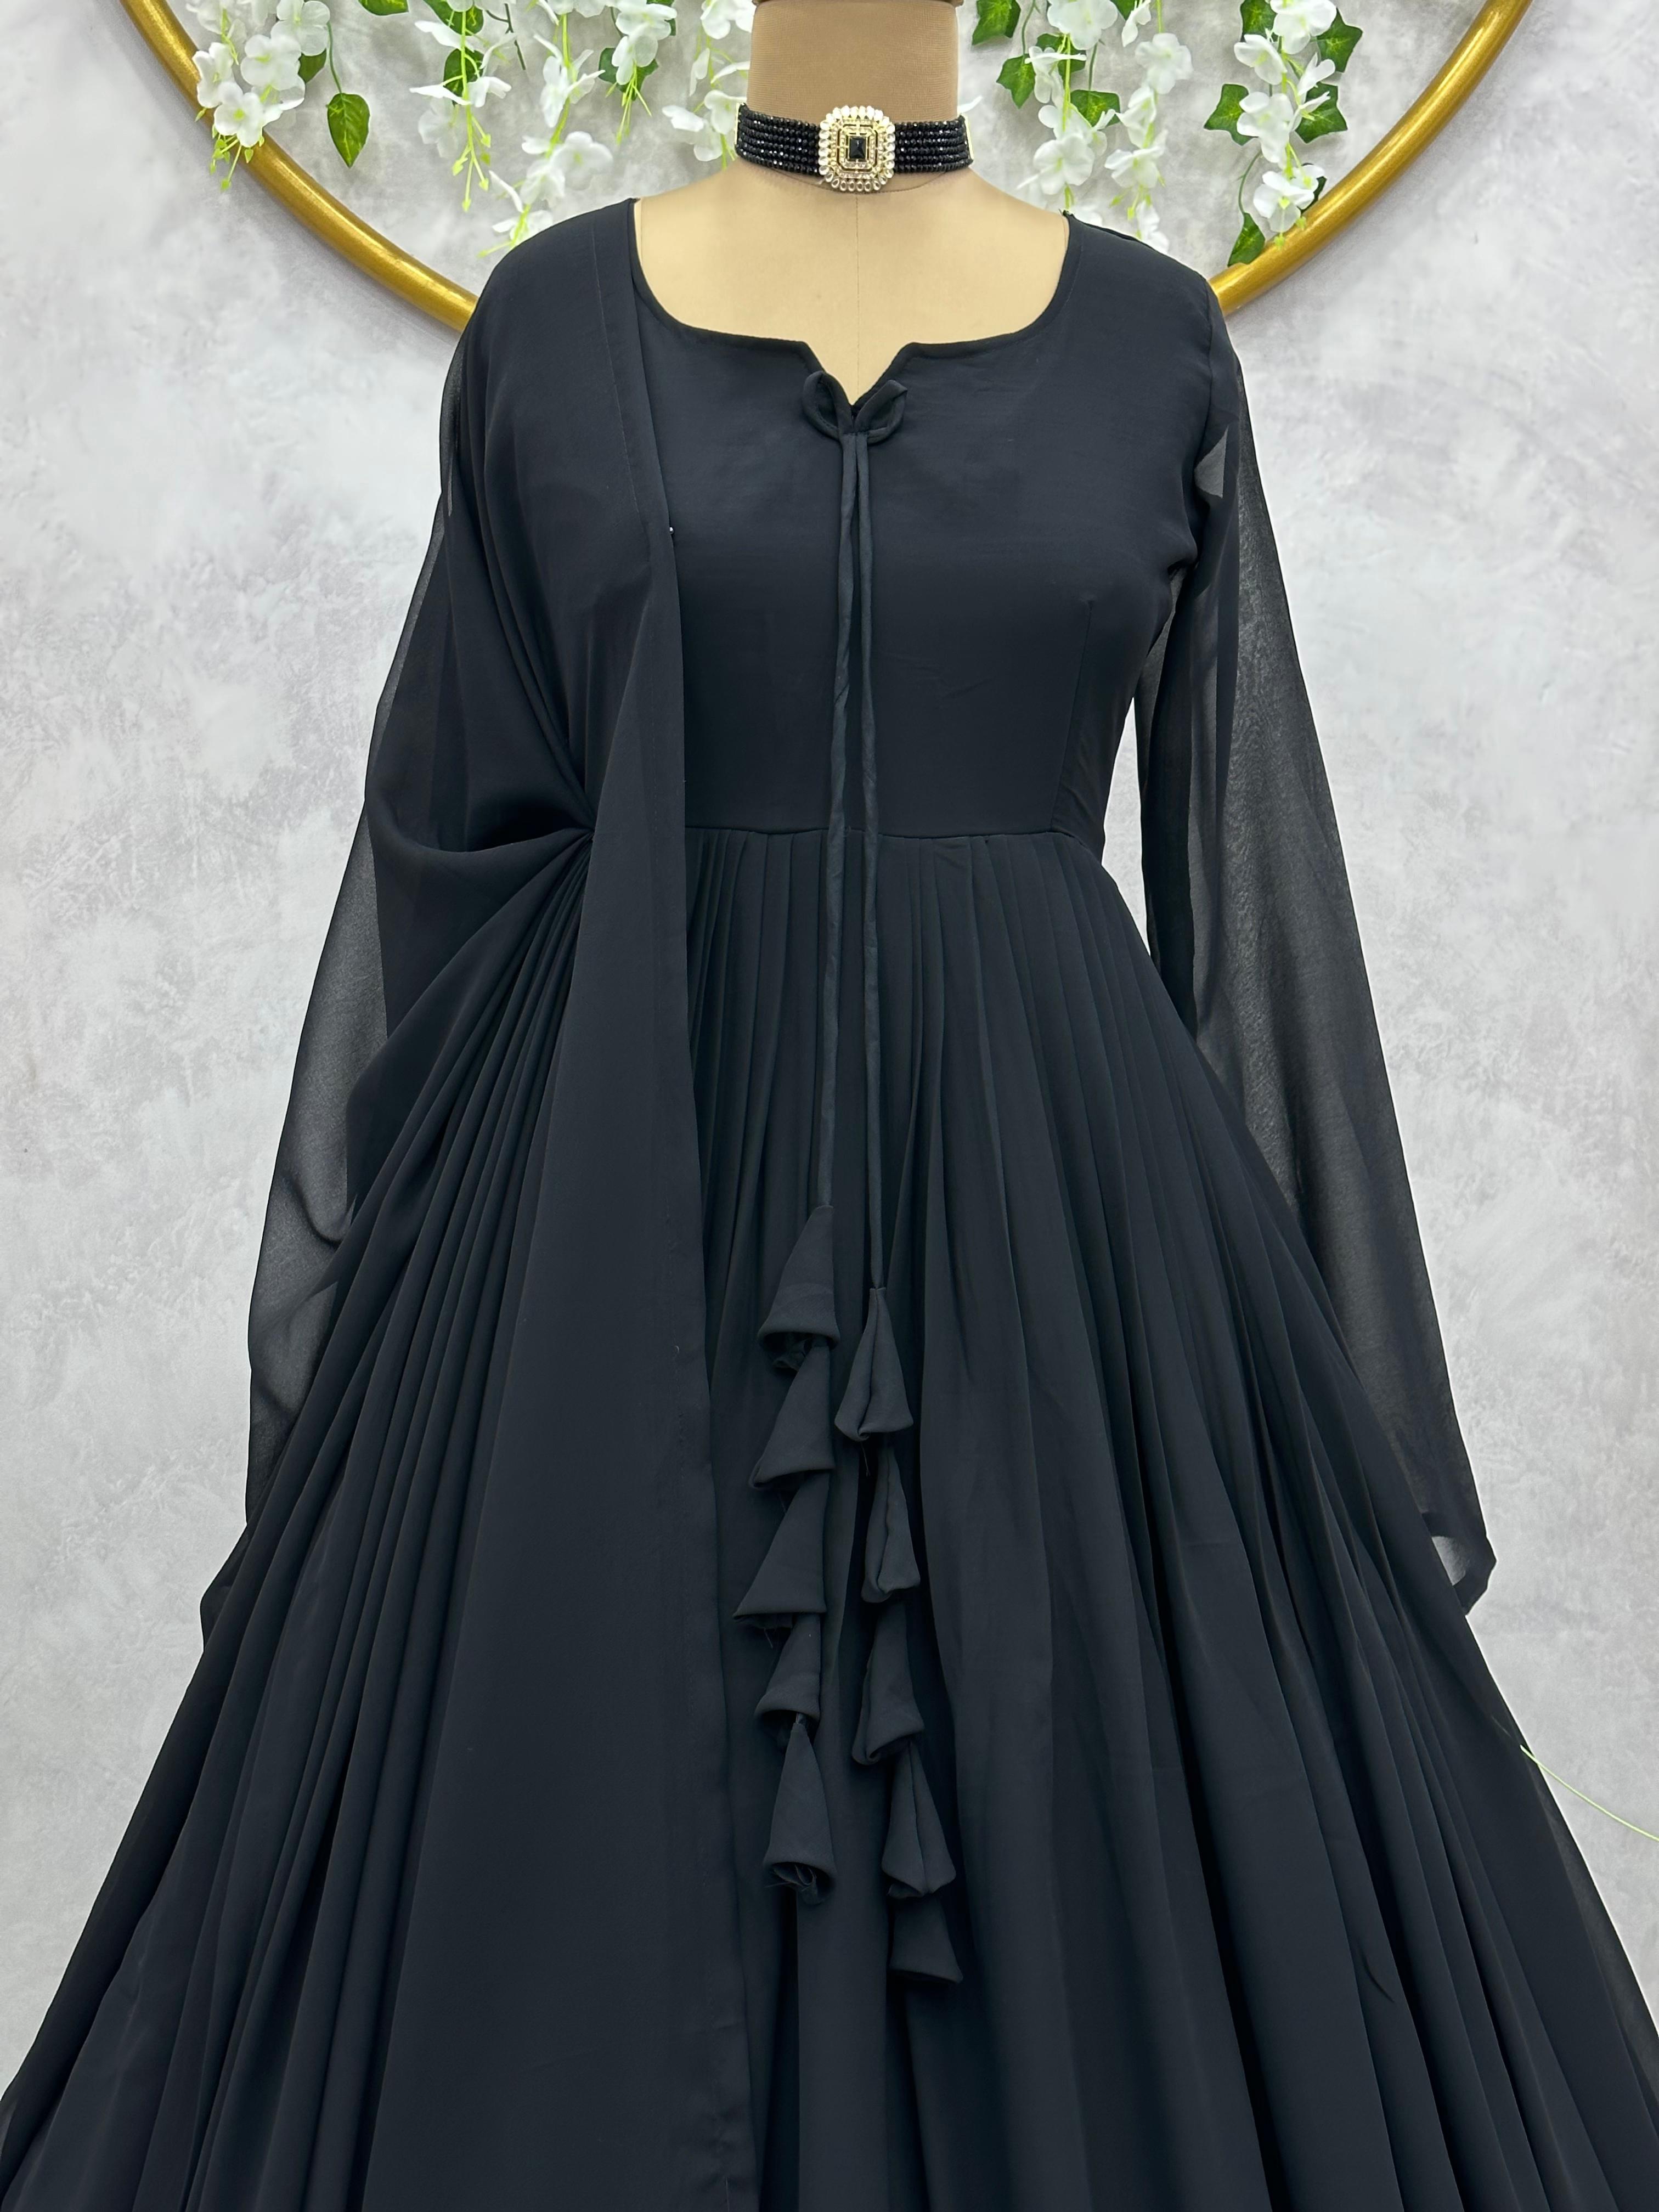 Shop Now Plus Size Mahak Rani Designer Dress - ADIRICHA